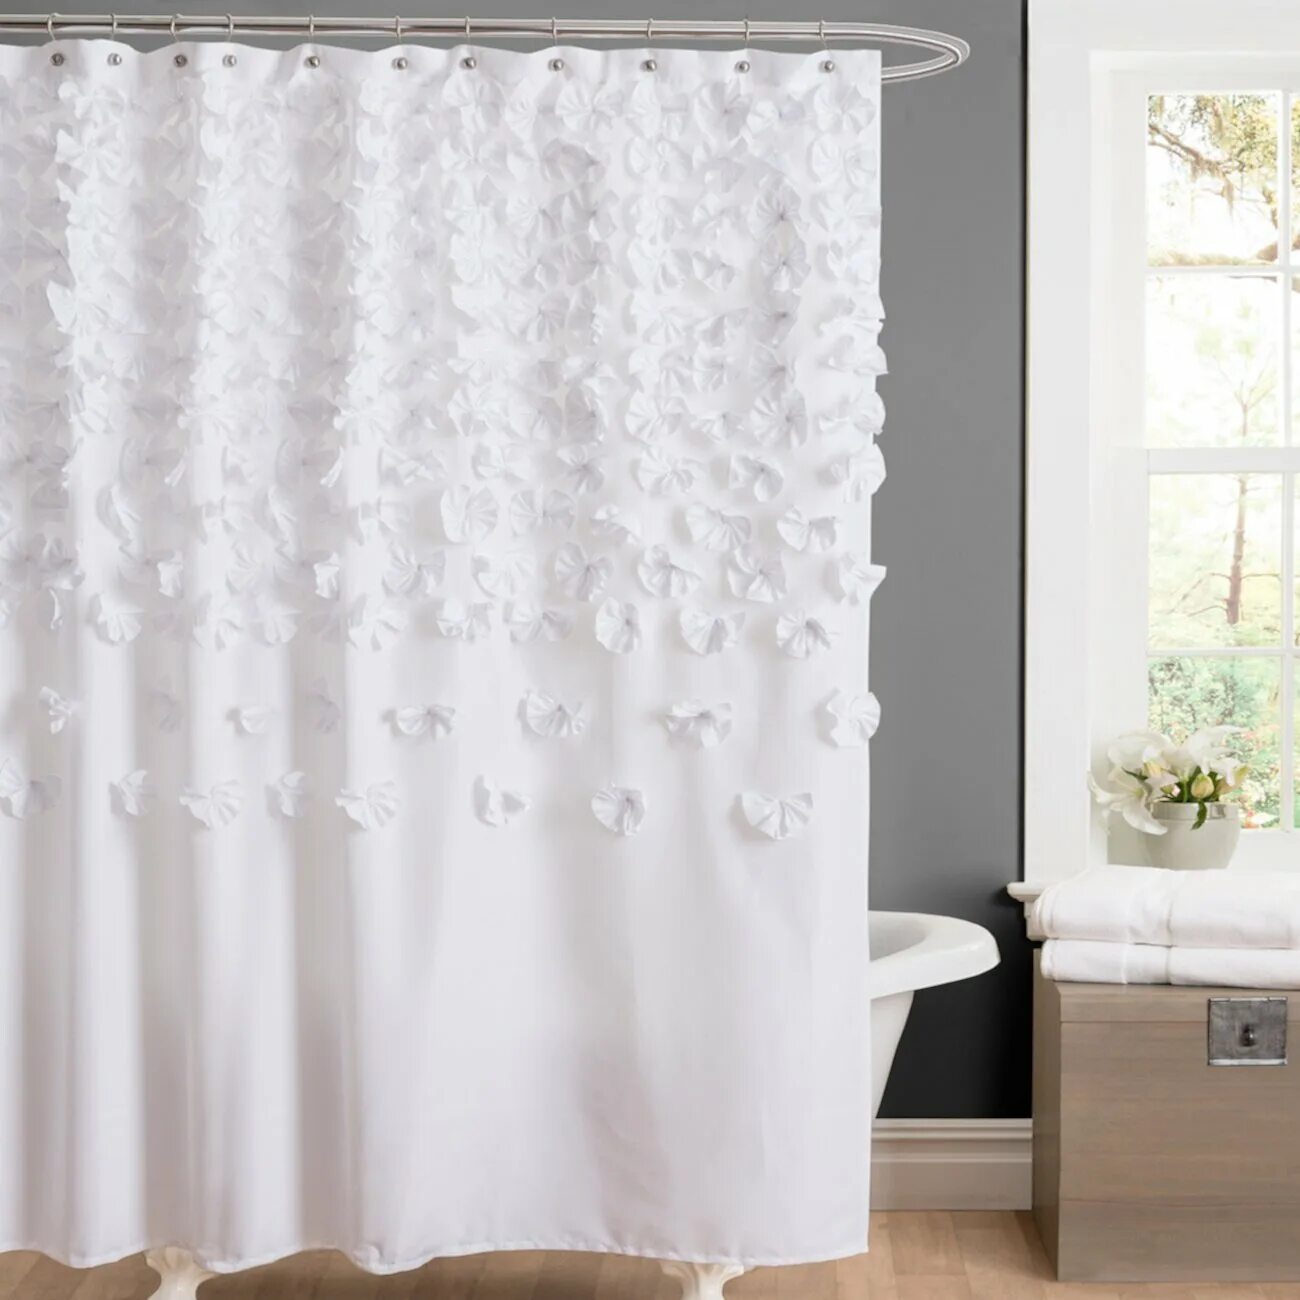 Штора для ванной Curtain MC-1804073. Штора Fabric Shower Curtain. Шторка для душа Shower Curtain f-b20y. Шторка для ванной d24p218i11. Лучшие шторки для ванны